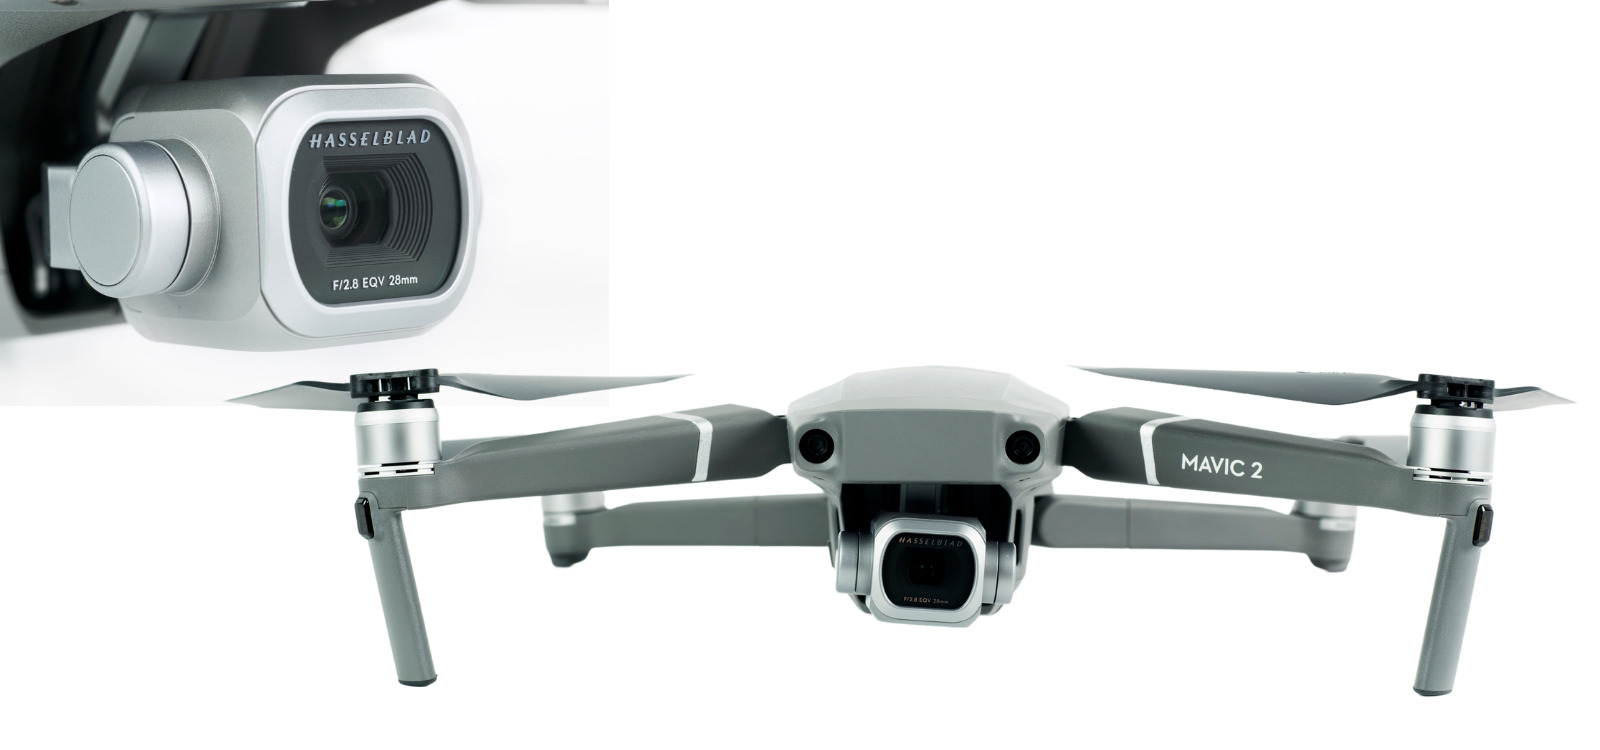 Media Ads - Grafica aeriana cu drona